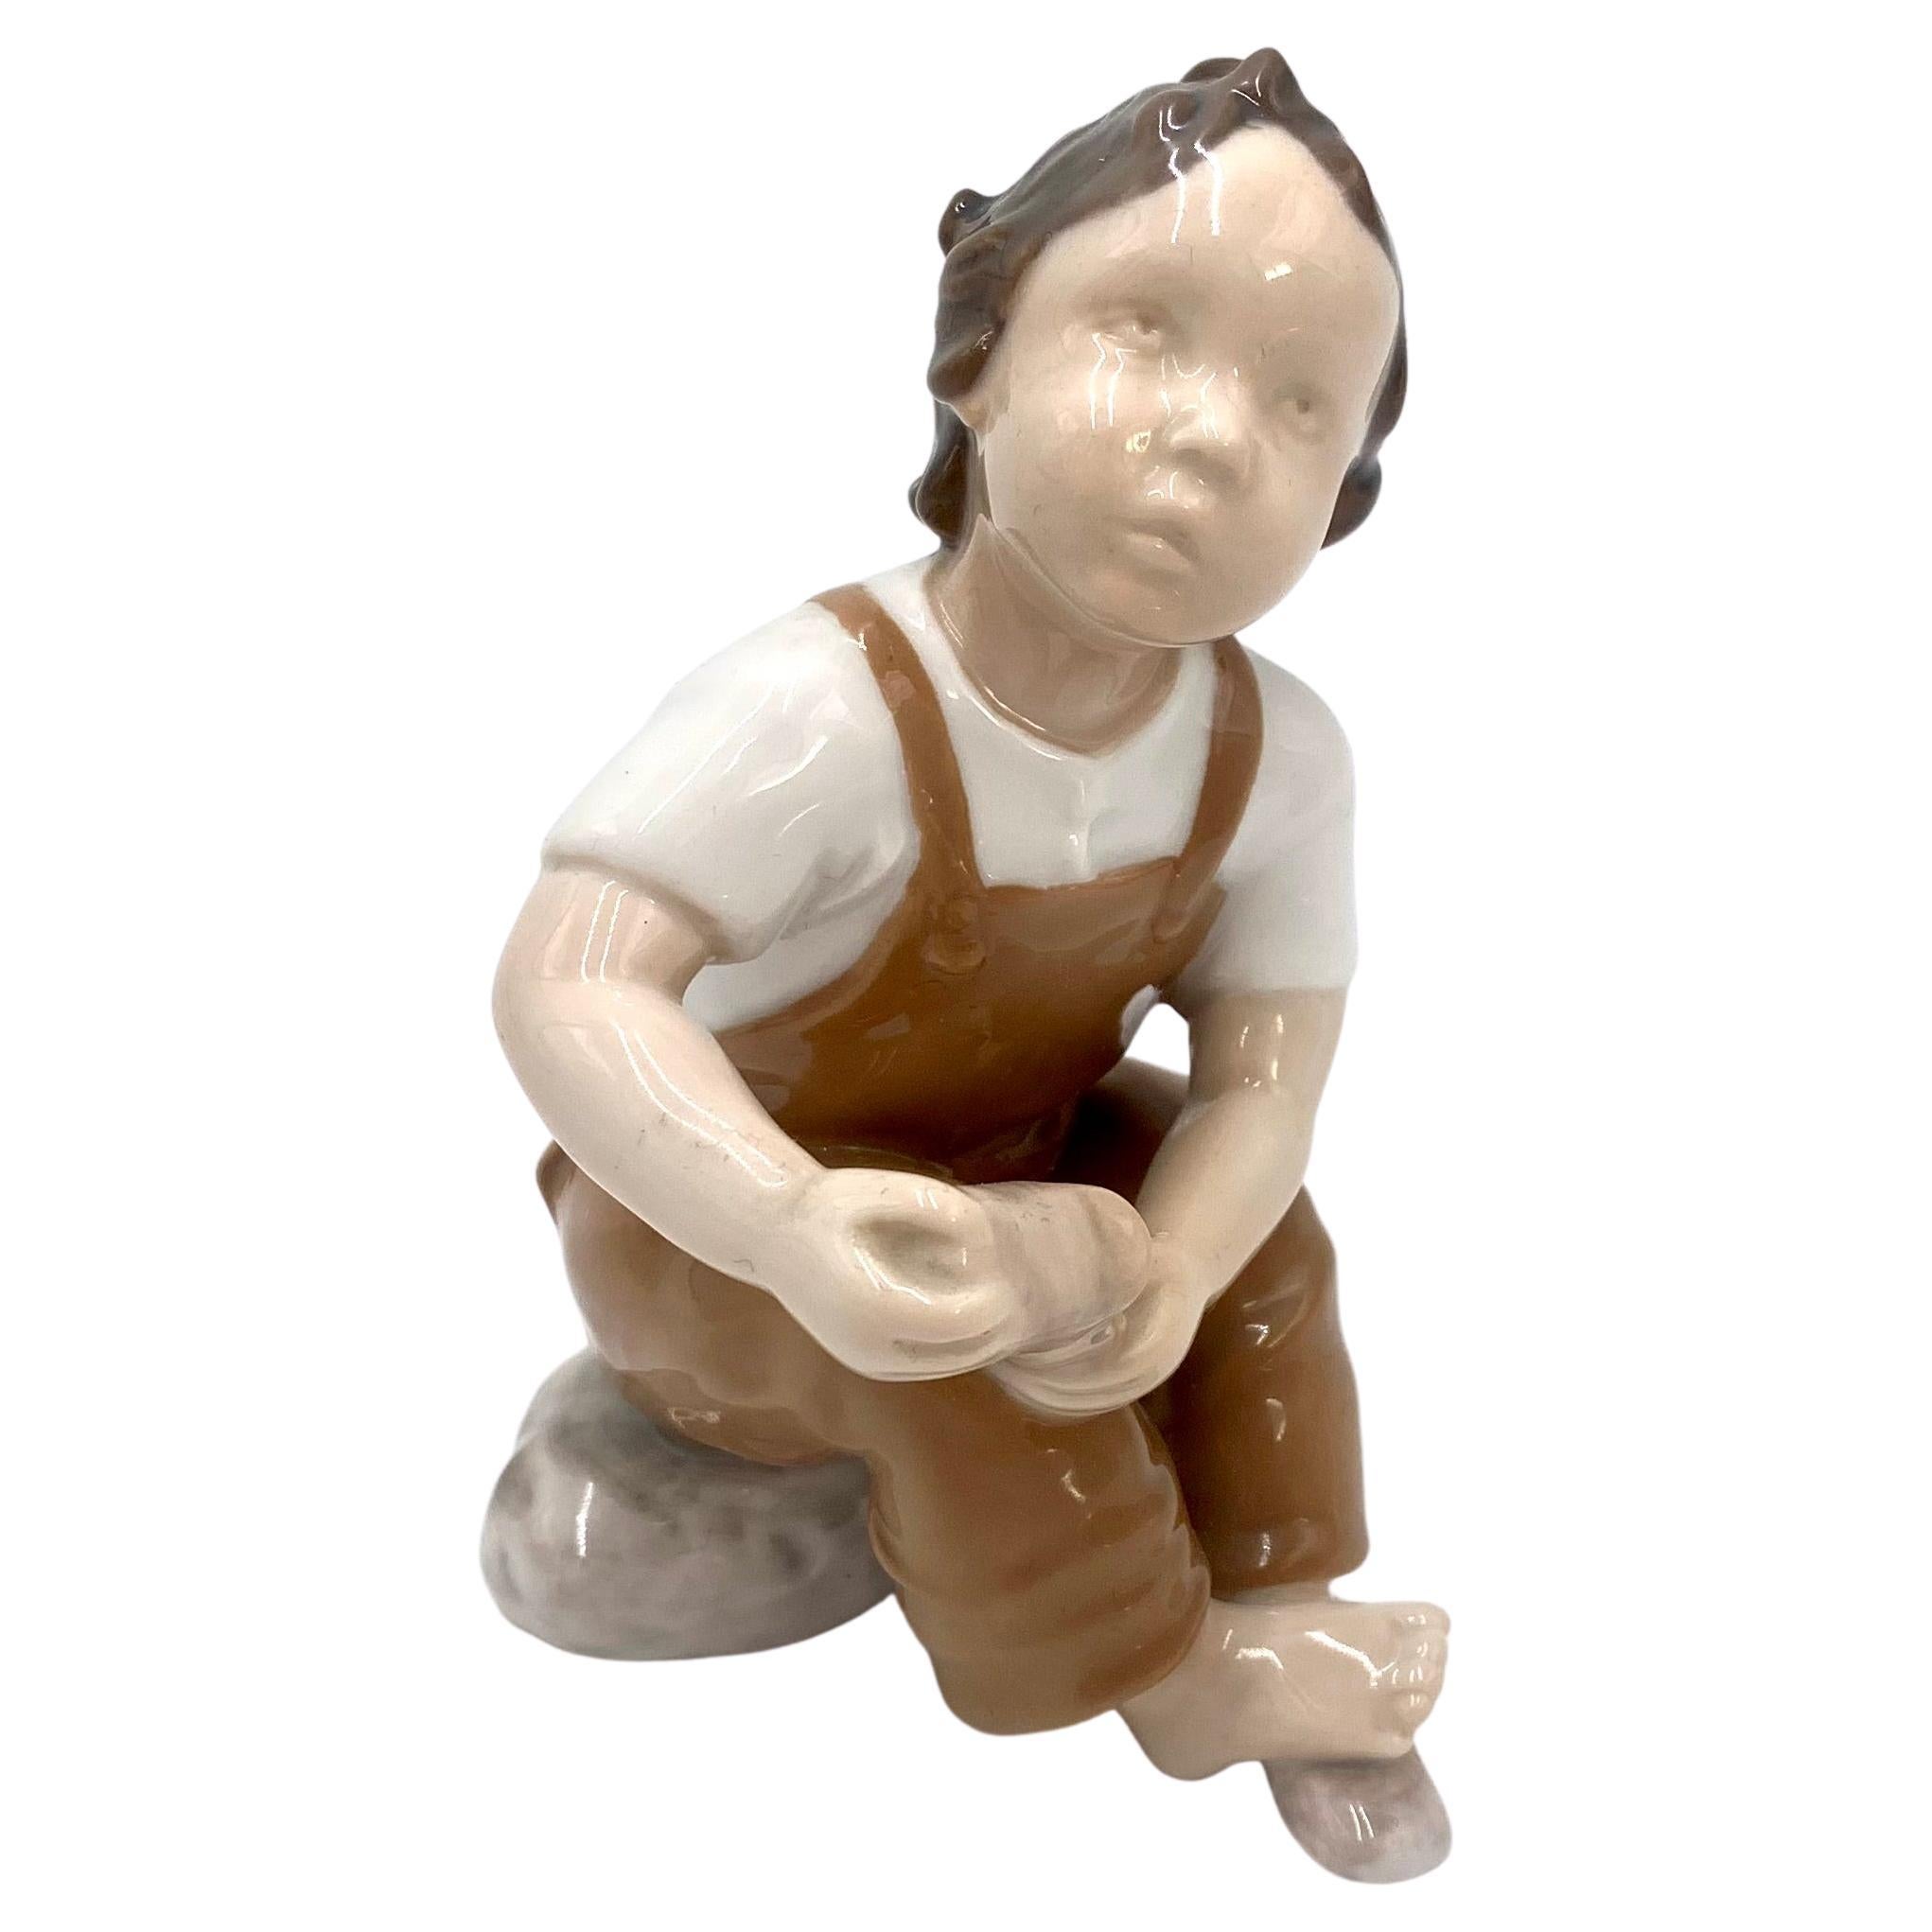 Figurine en porcelaine d'un garçon, Bing & Grondahl, Danemark, années 1950 / 1960